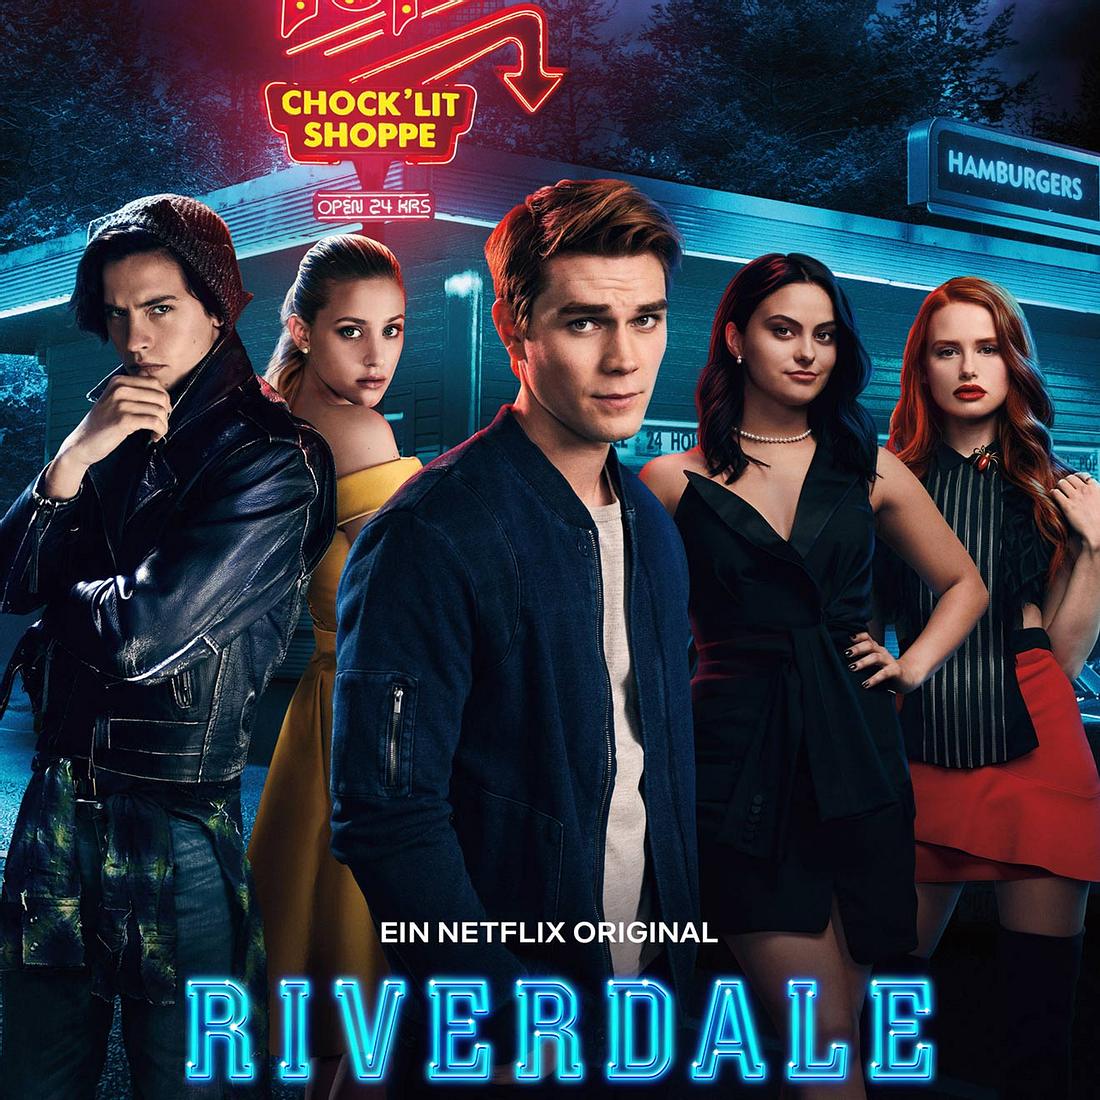 „Riverdale“: Dreharbeiten wegen Corona gestoppt!